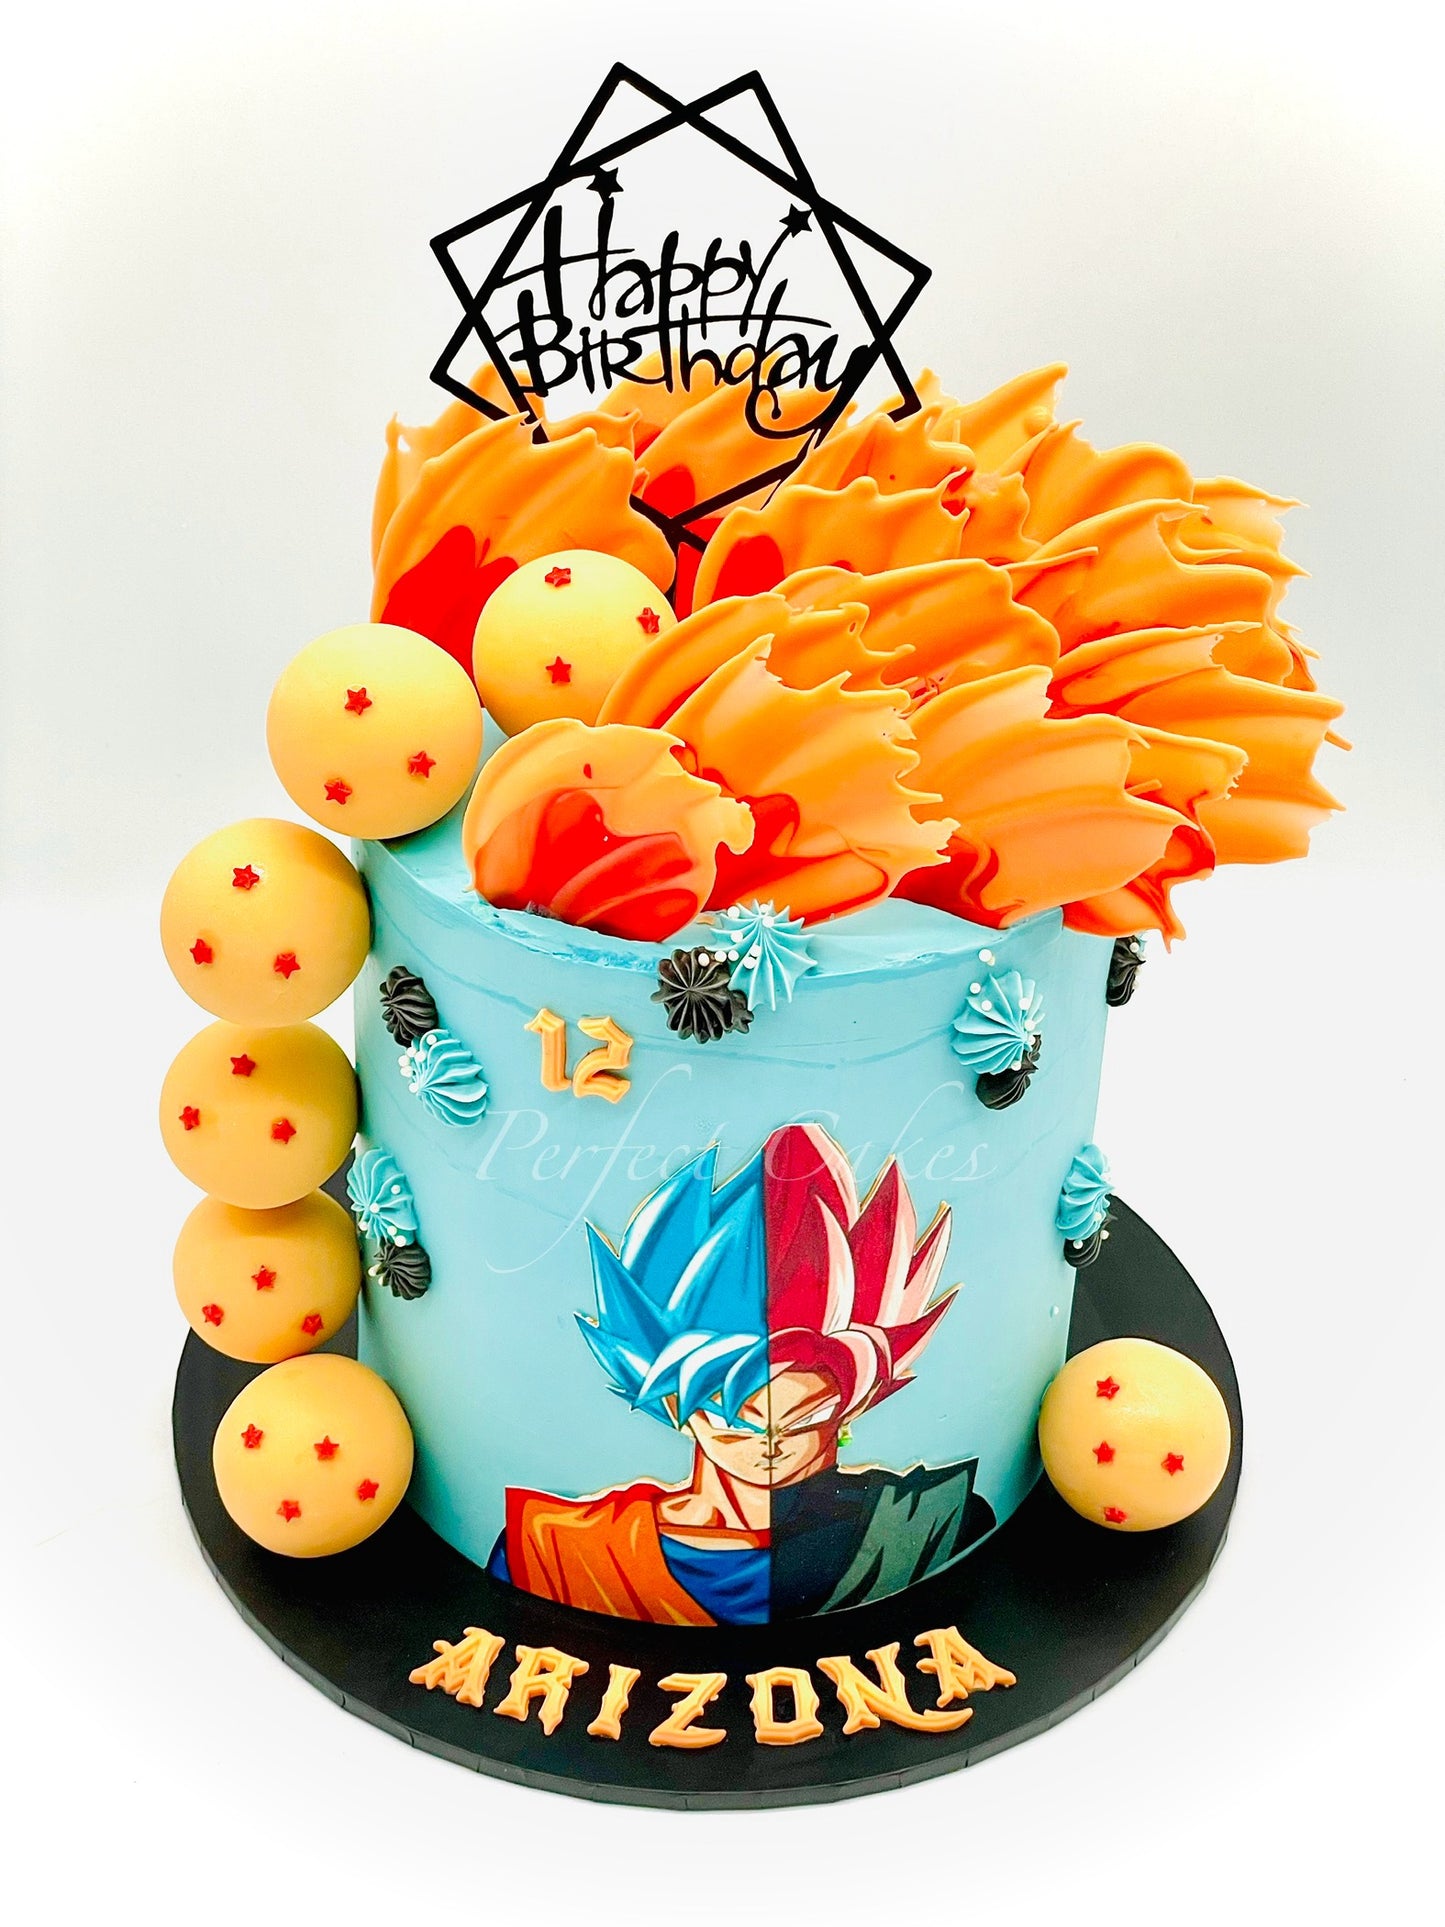 Goku Dragon Ball Z Cake